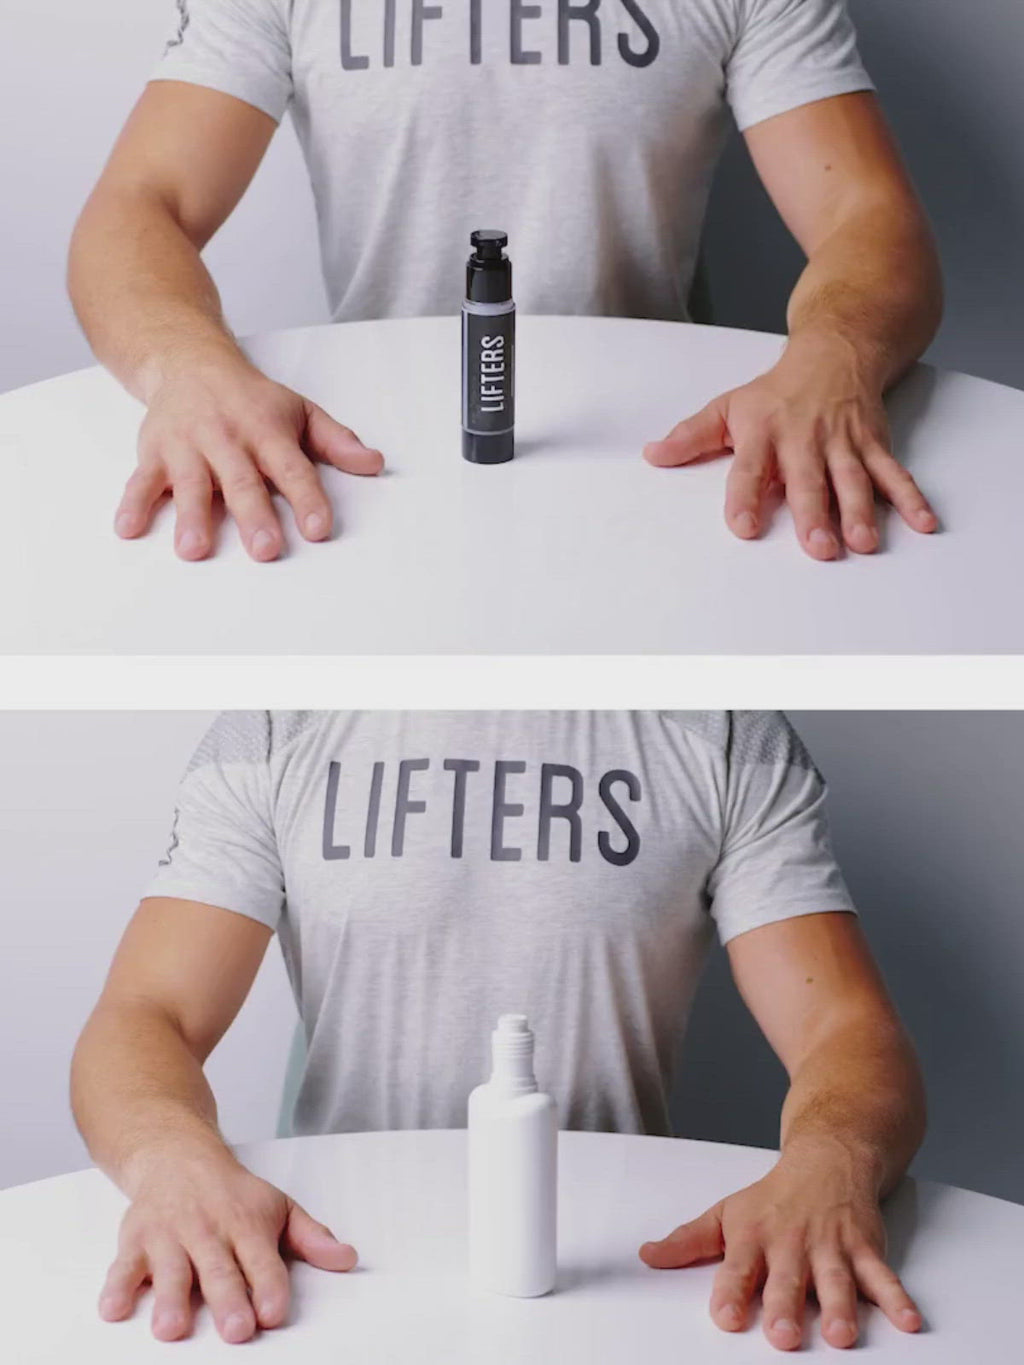 Clean Grip transparentes Liquid Chalk Vergleichsvideo von Clean Grip und normalem Liquid Chalk